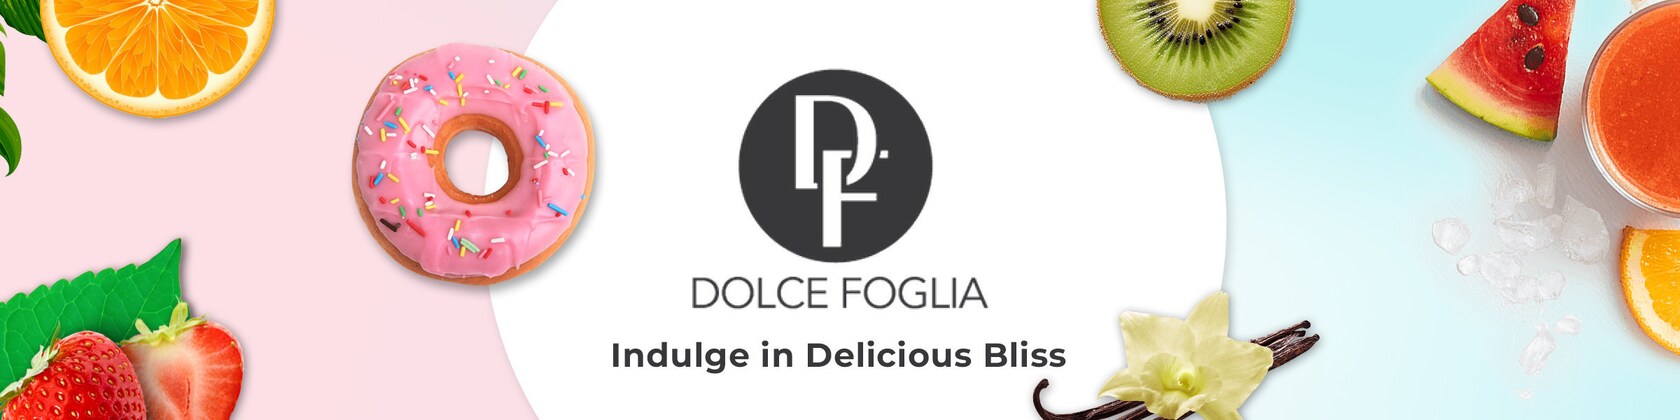  Dolce Foglia Anise Flavoring Oils - 8 Oz. Multipurpose